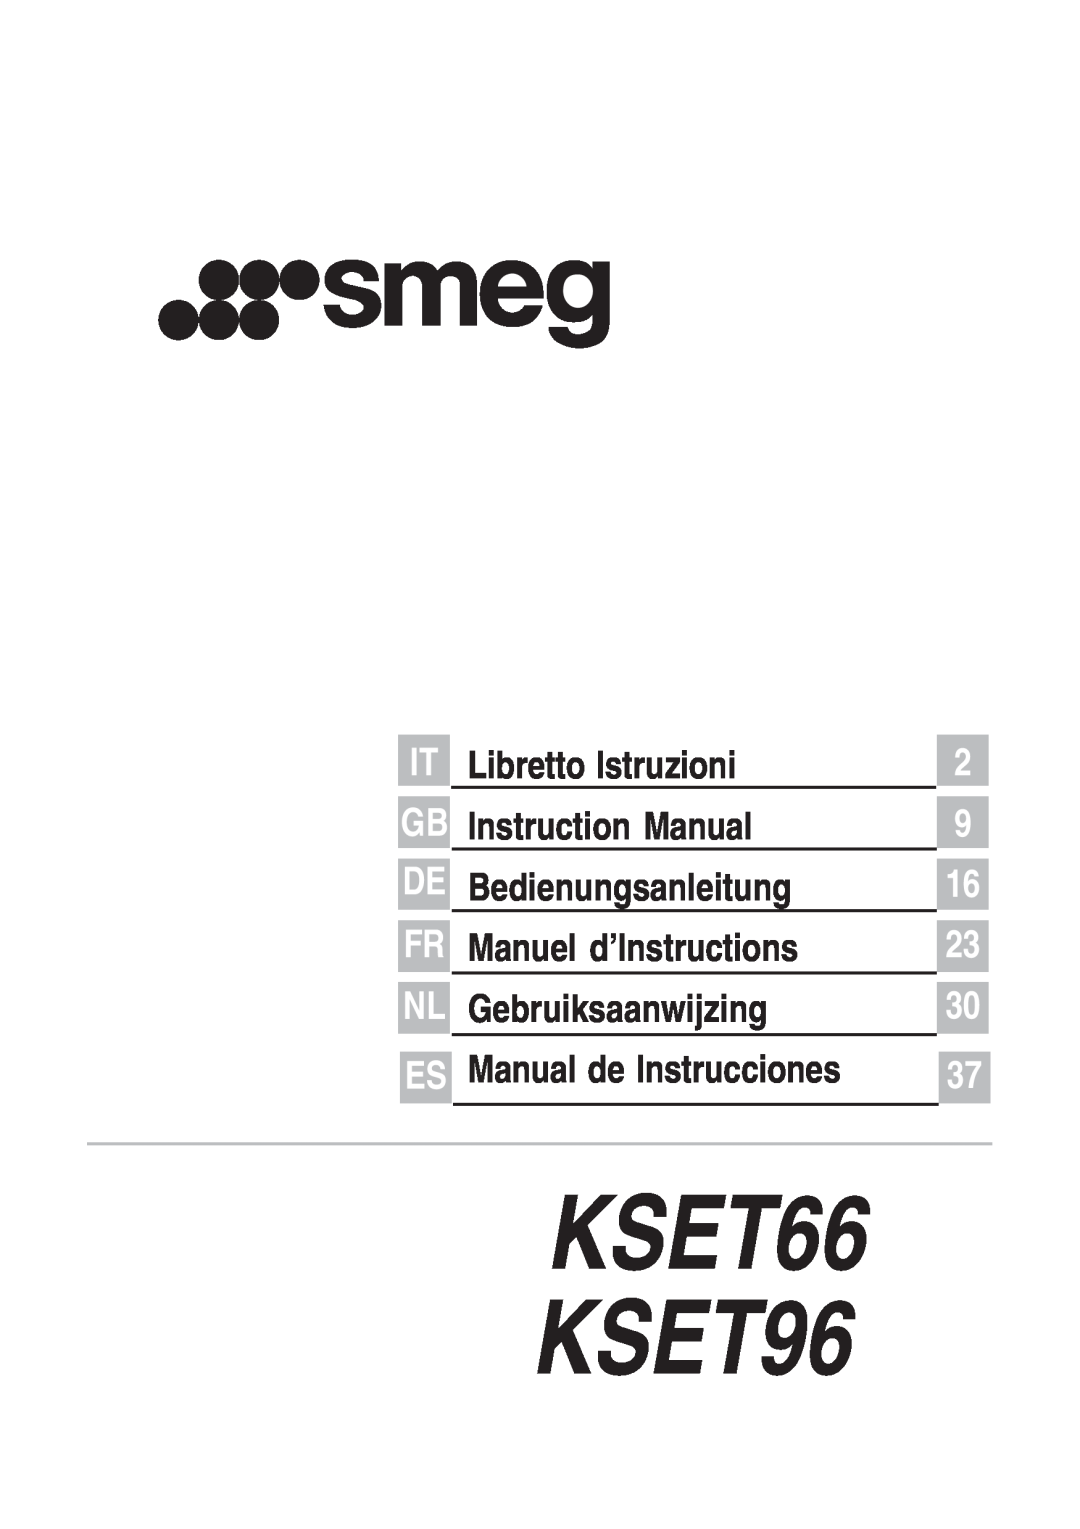 Smeg KSET96 instruction manual Libretto Istruzioni, Bedienungsanleitung, Manuel d’Instructions, Gebruiksaanwijzing, Fr Nl 